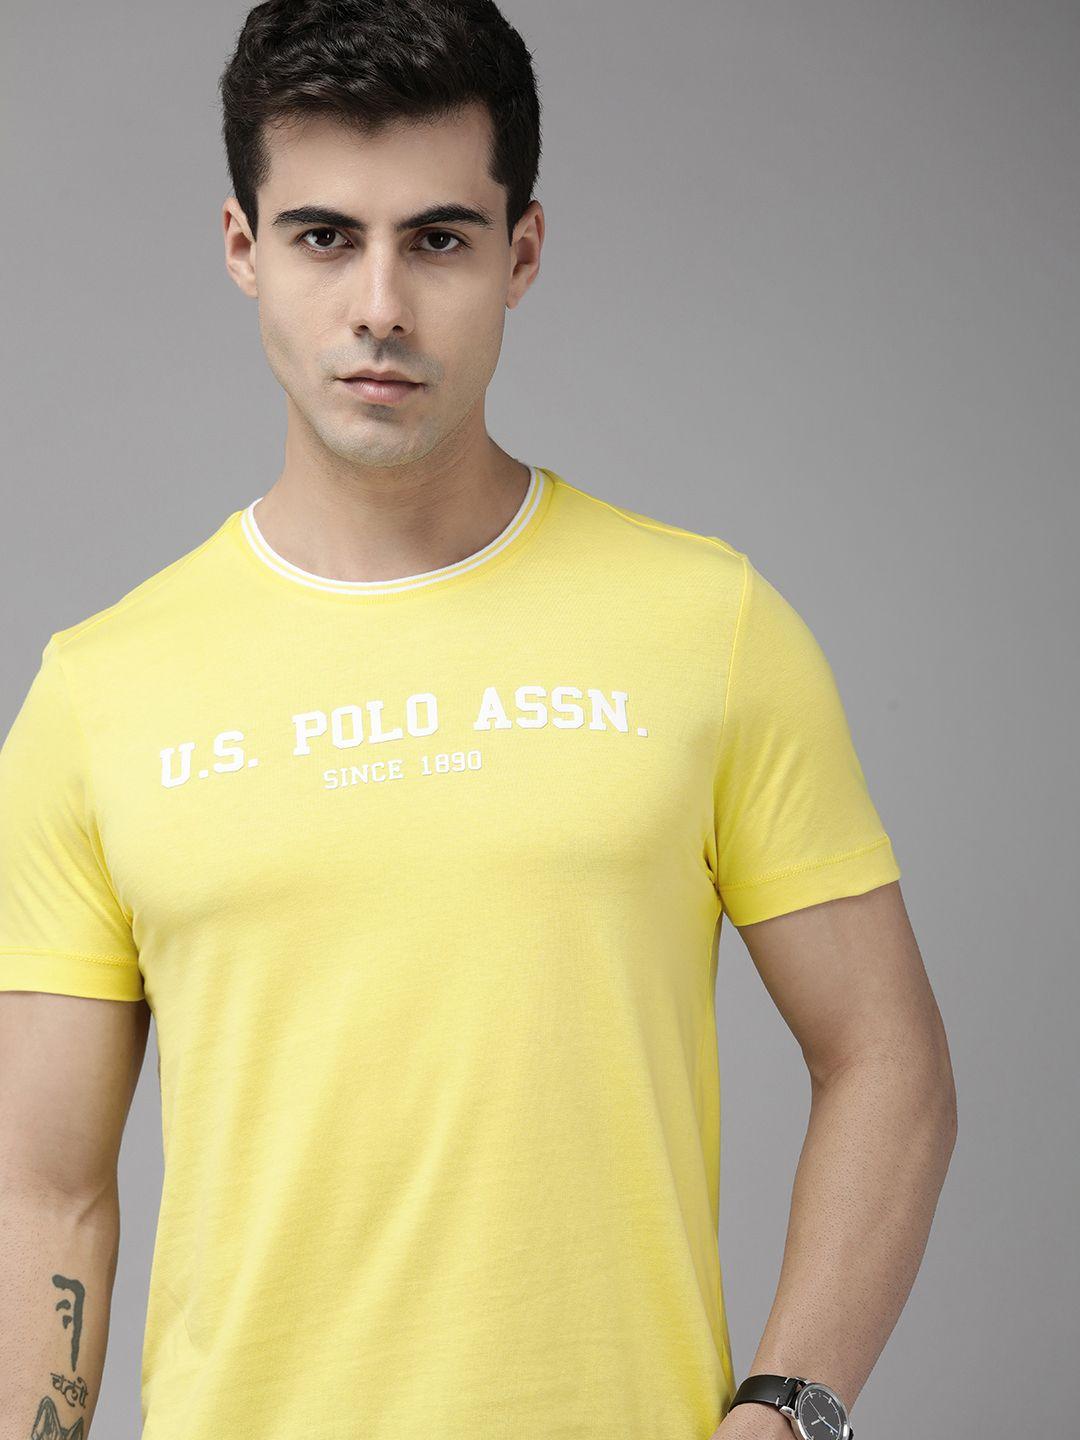 u.s. polo assn. men brand logo printed pure cotton slim fit t-shirt